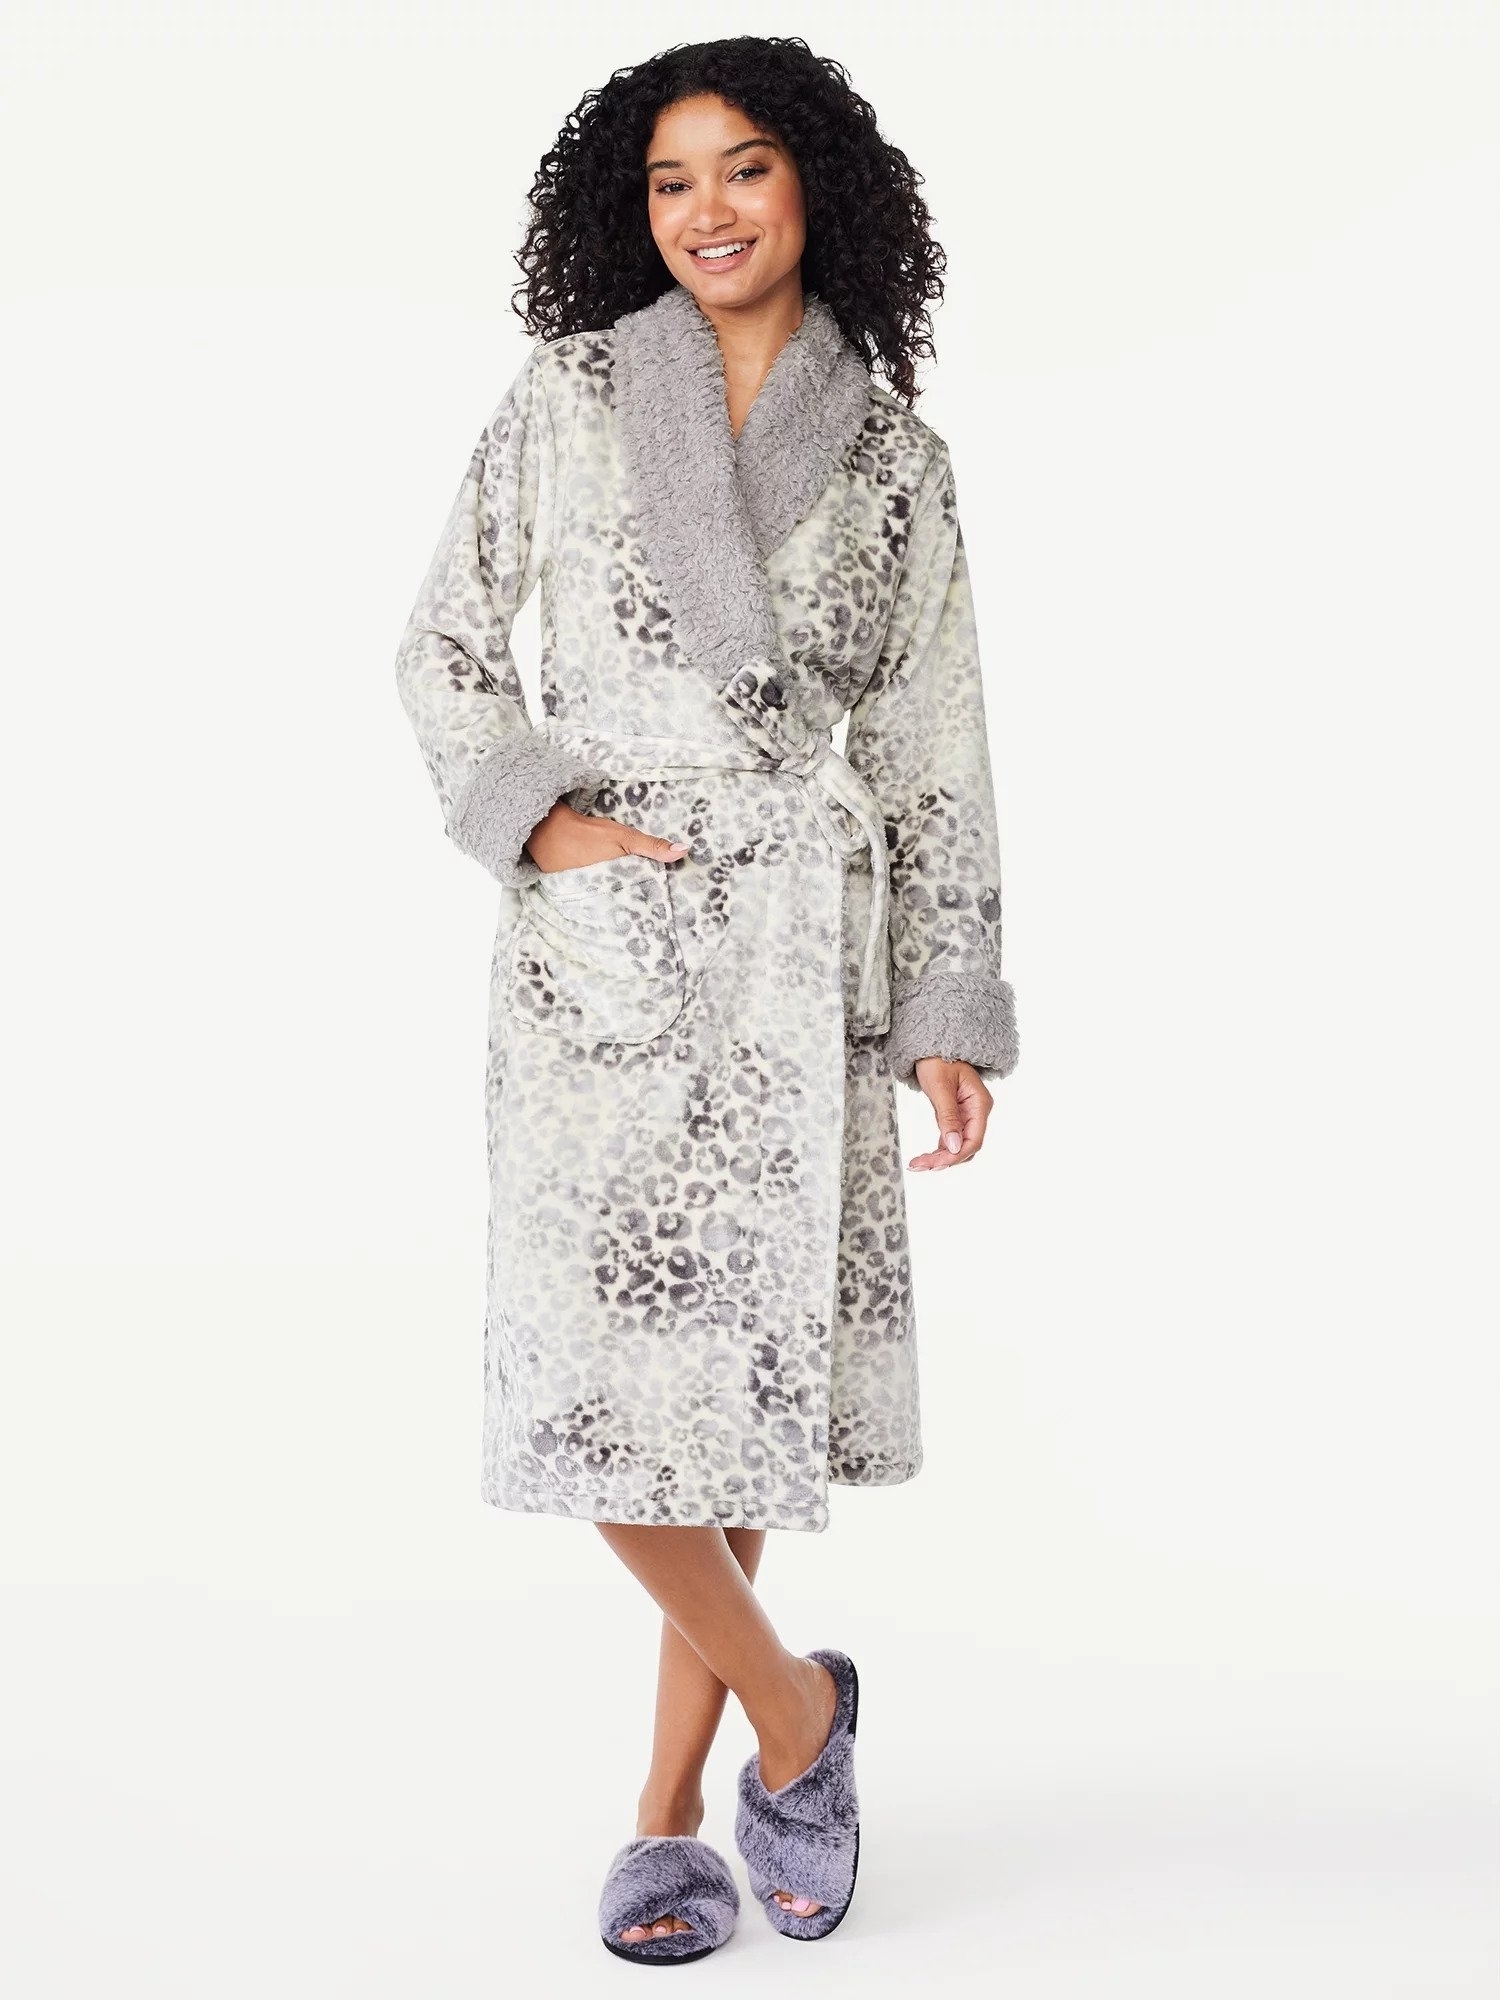 model wearing the robe